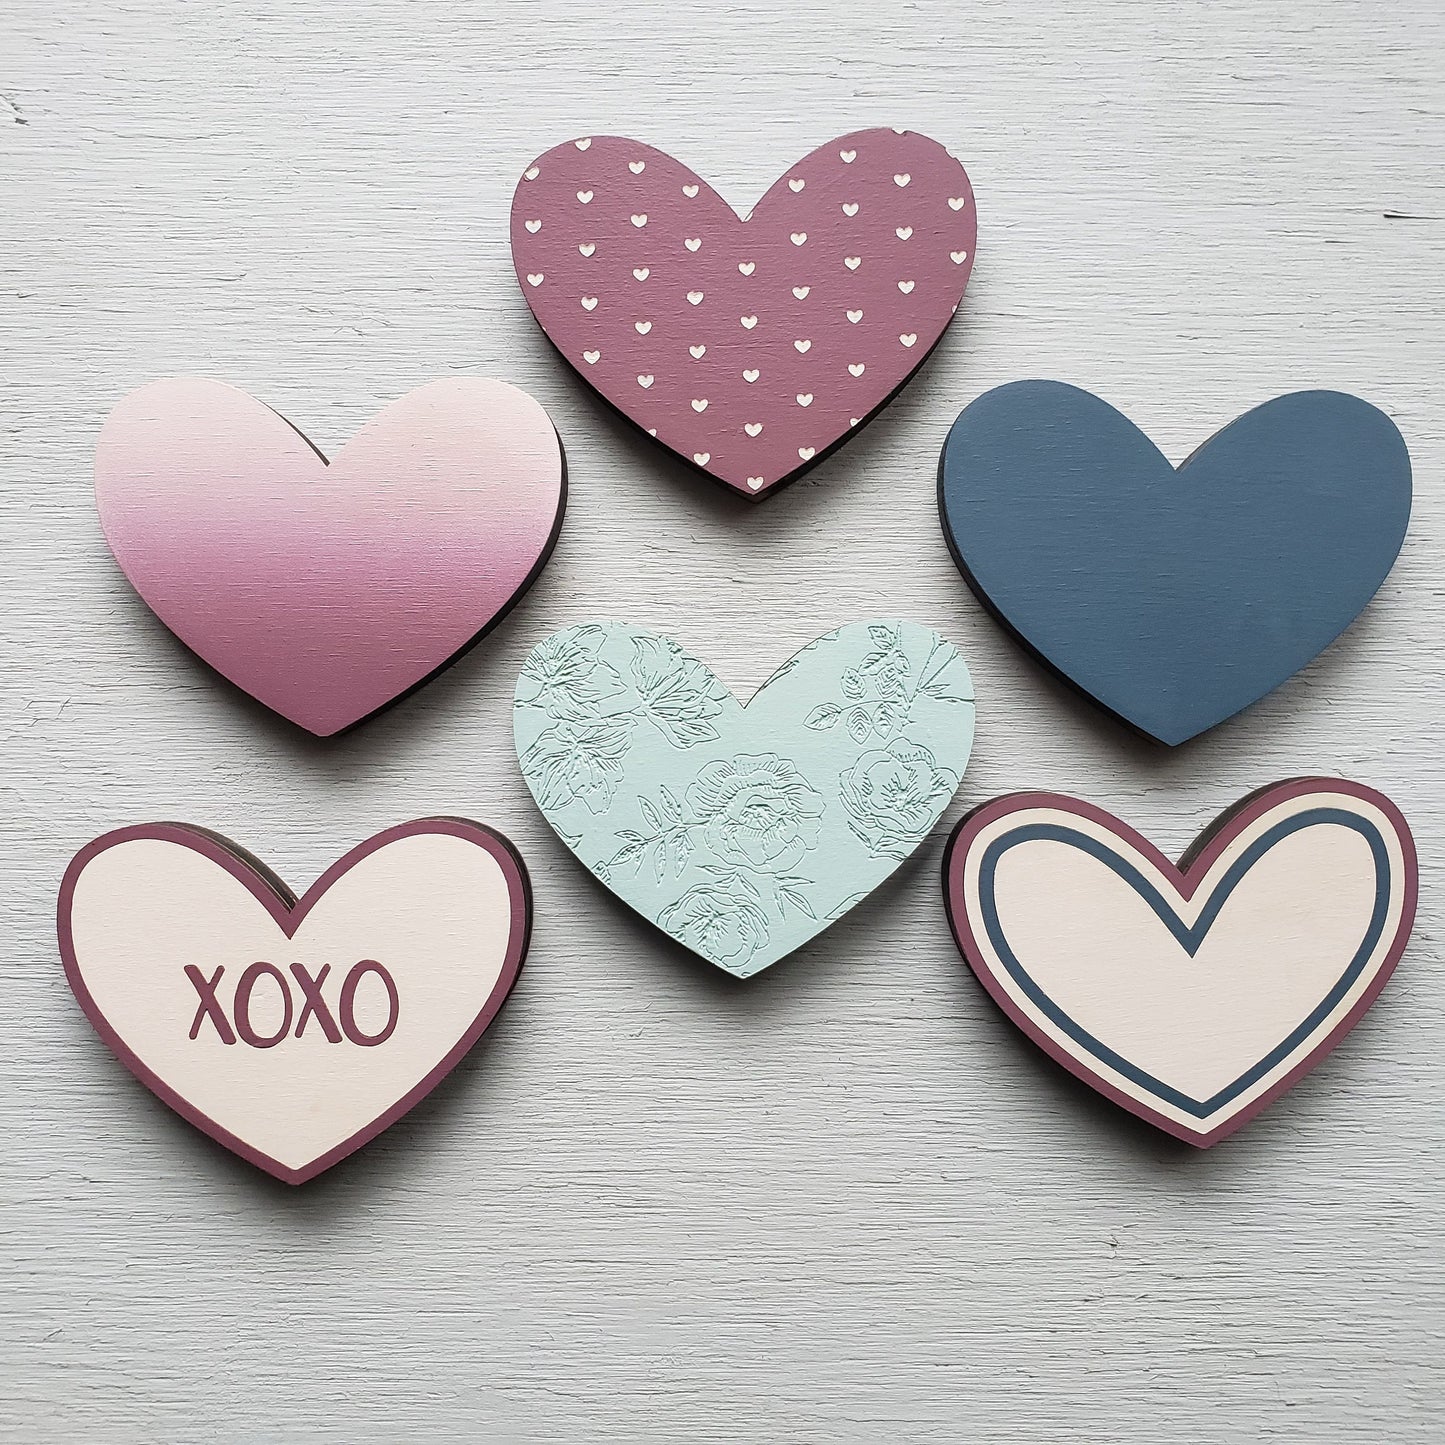 Wooden Heart Shelf Sitters - Valentine's Day Decor - Gift for Galentine